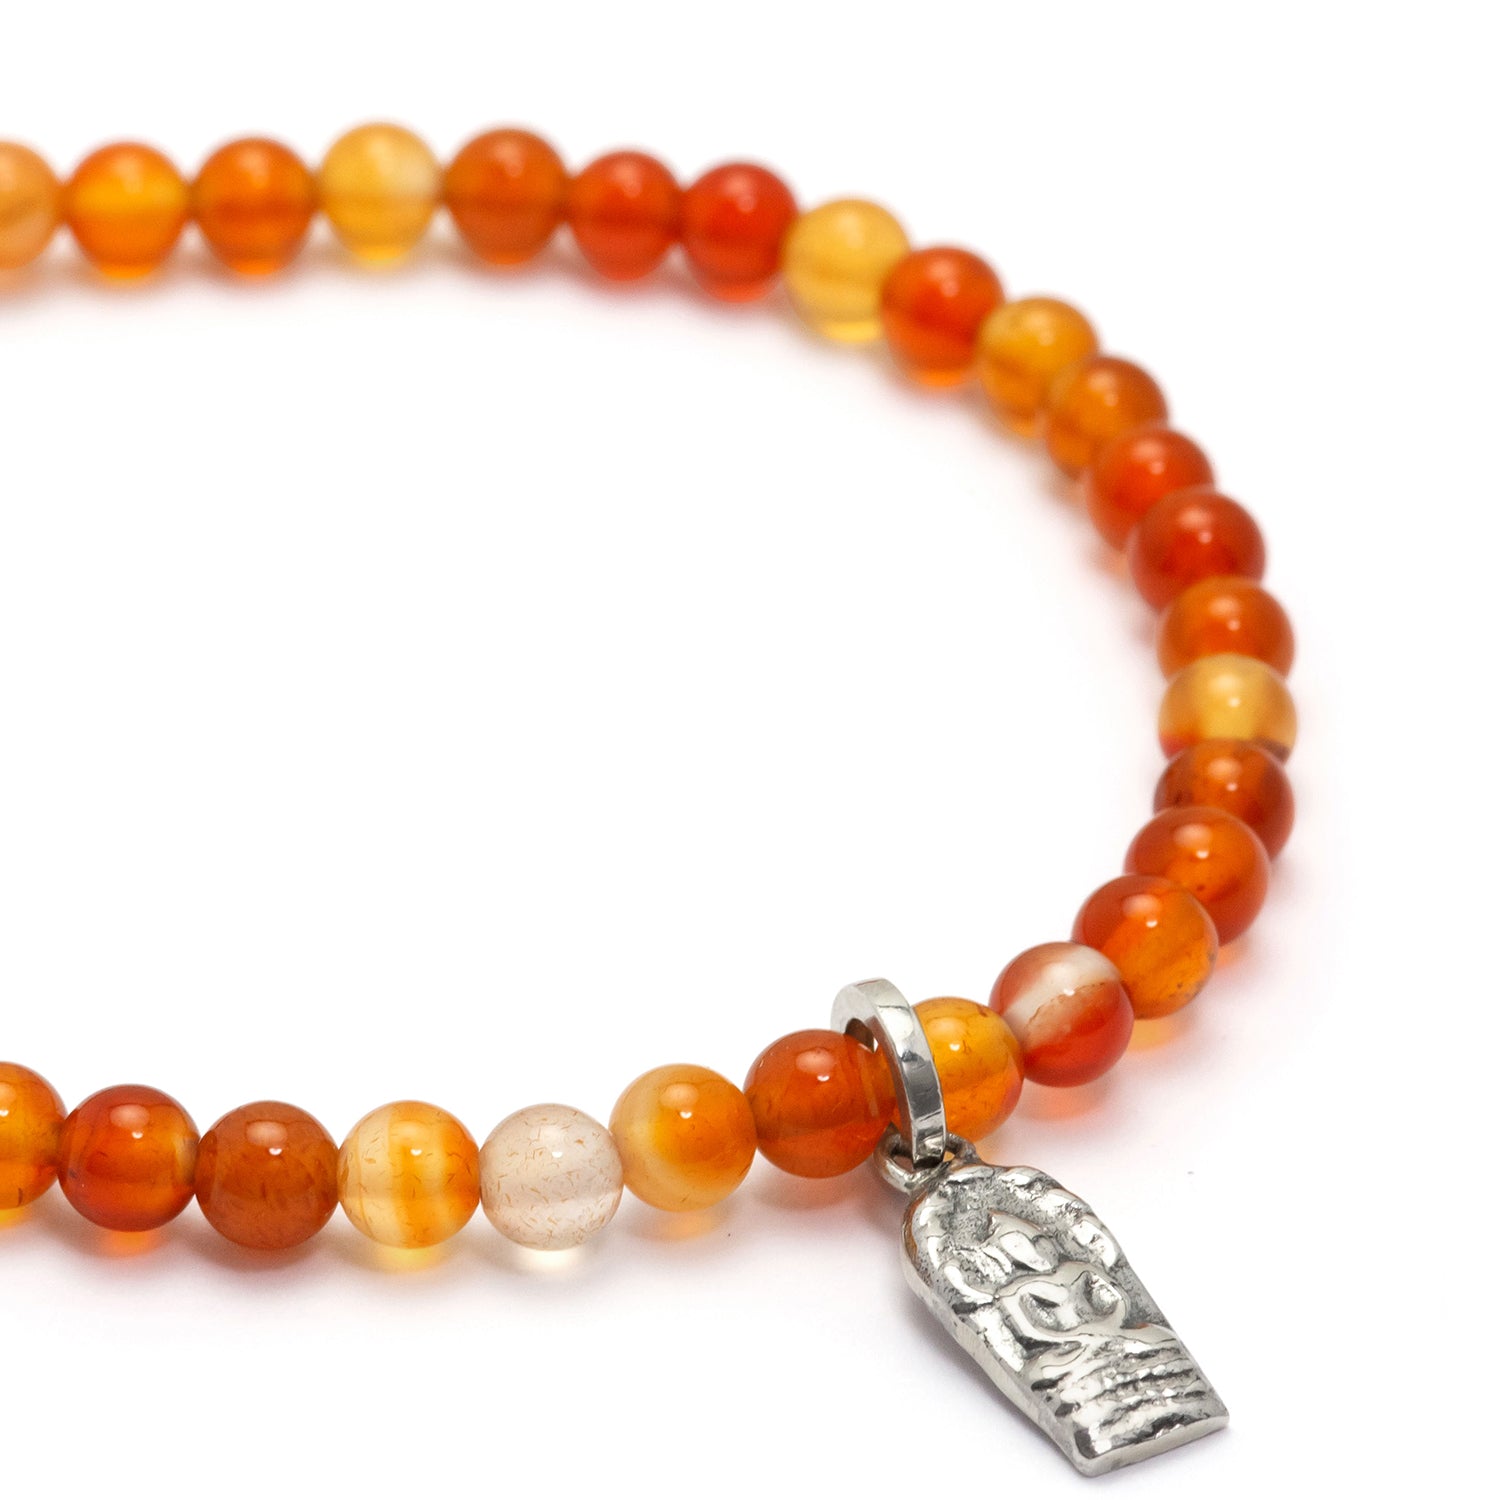 Buddha bracelet mini with carnelian bead in sterling silver from ETERNAL BLISS - Spiritual jewelry